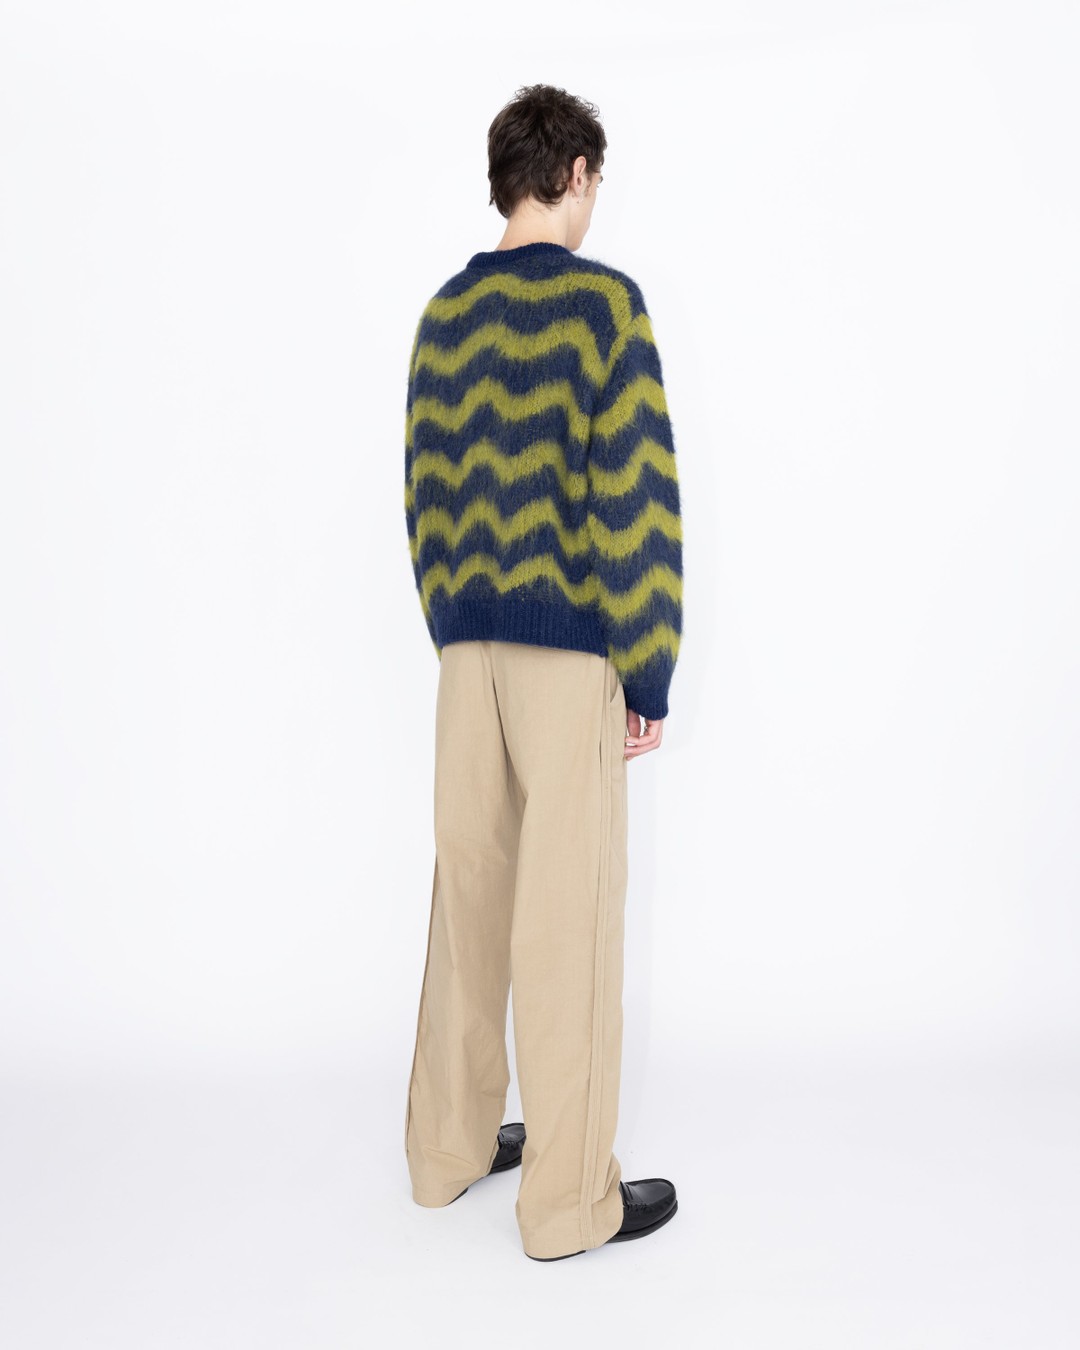 Highsnobiety HS05 – Alpaca Fuzzy Wave Sweater Navy/Olive Green - Knitwear - Multi - Image 5